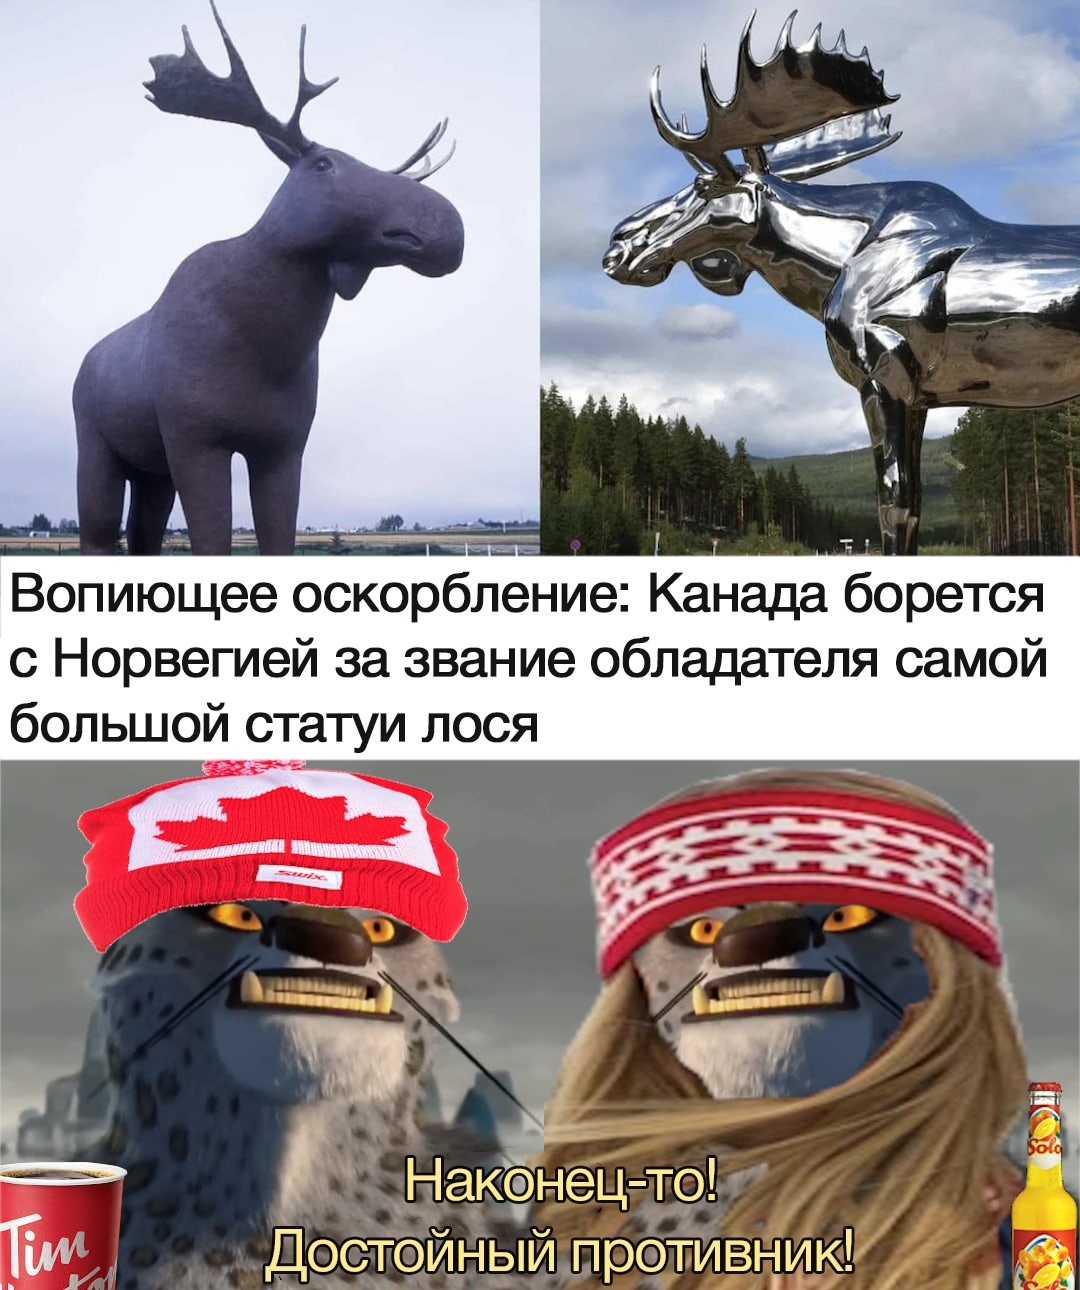 Battle! - Sculpture, Elk, Canada, Norway, Memes